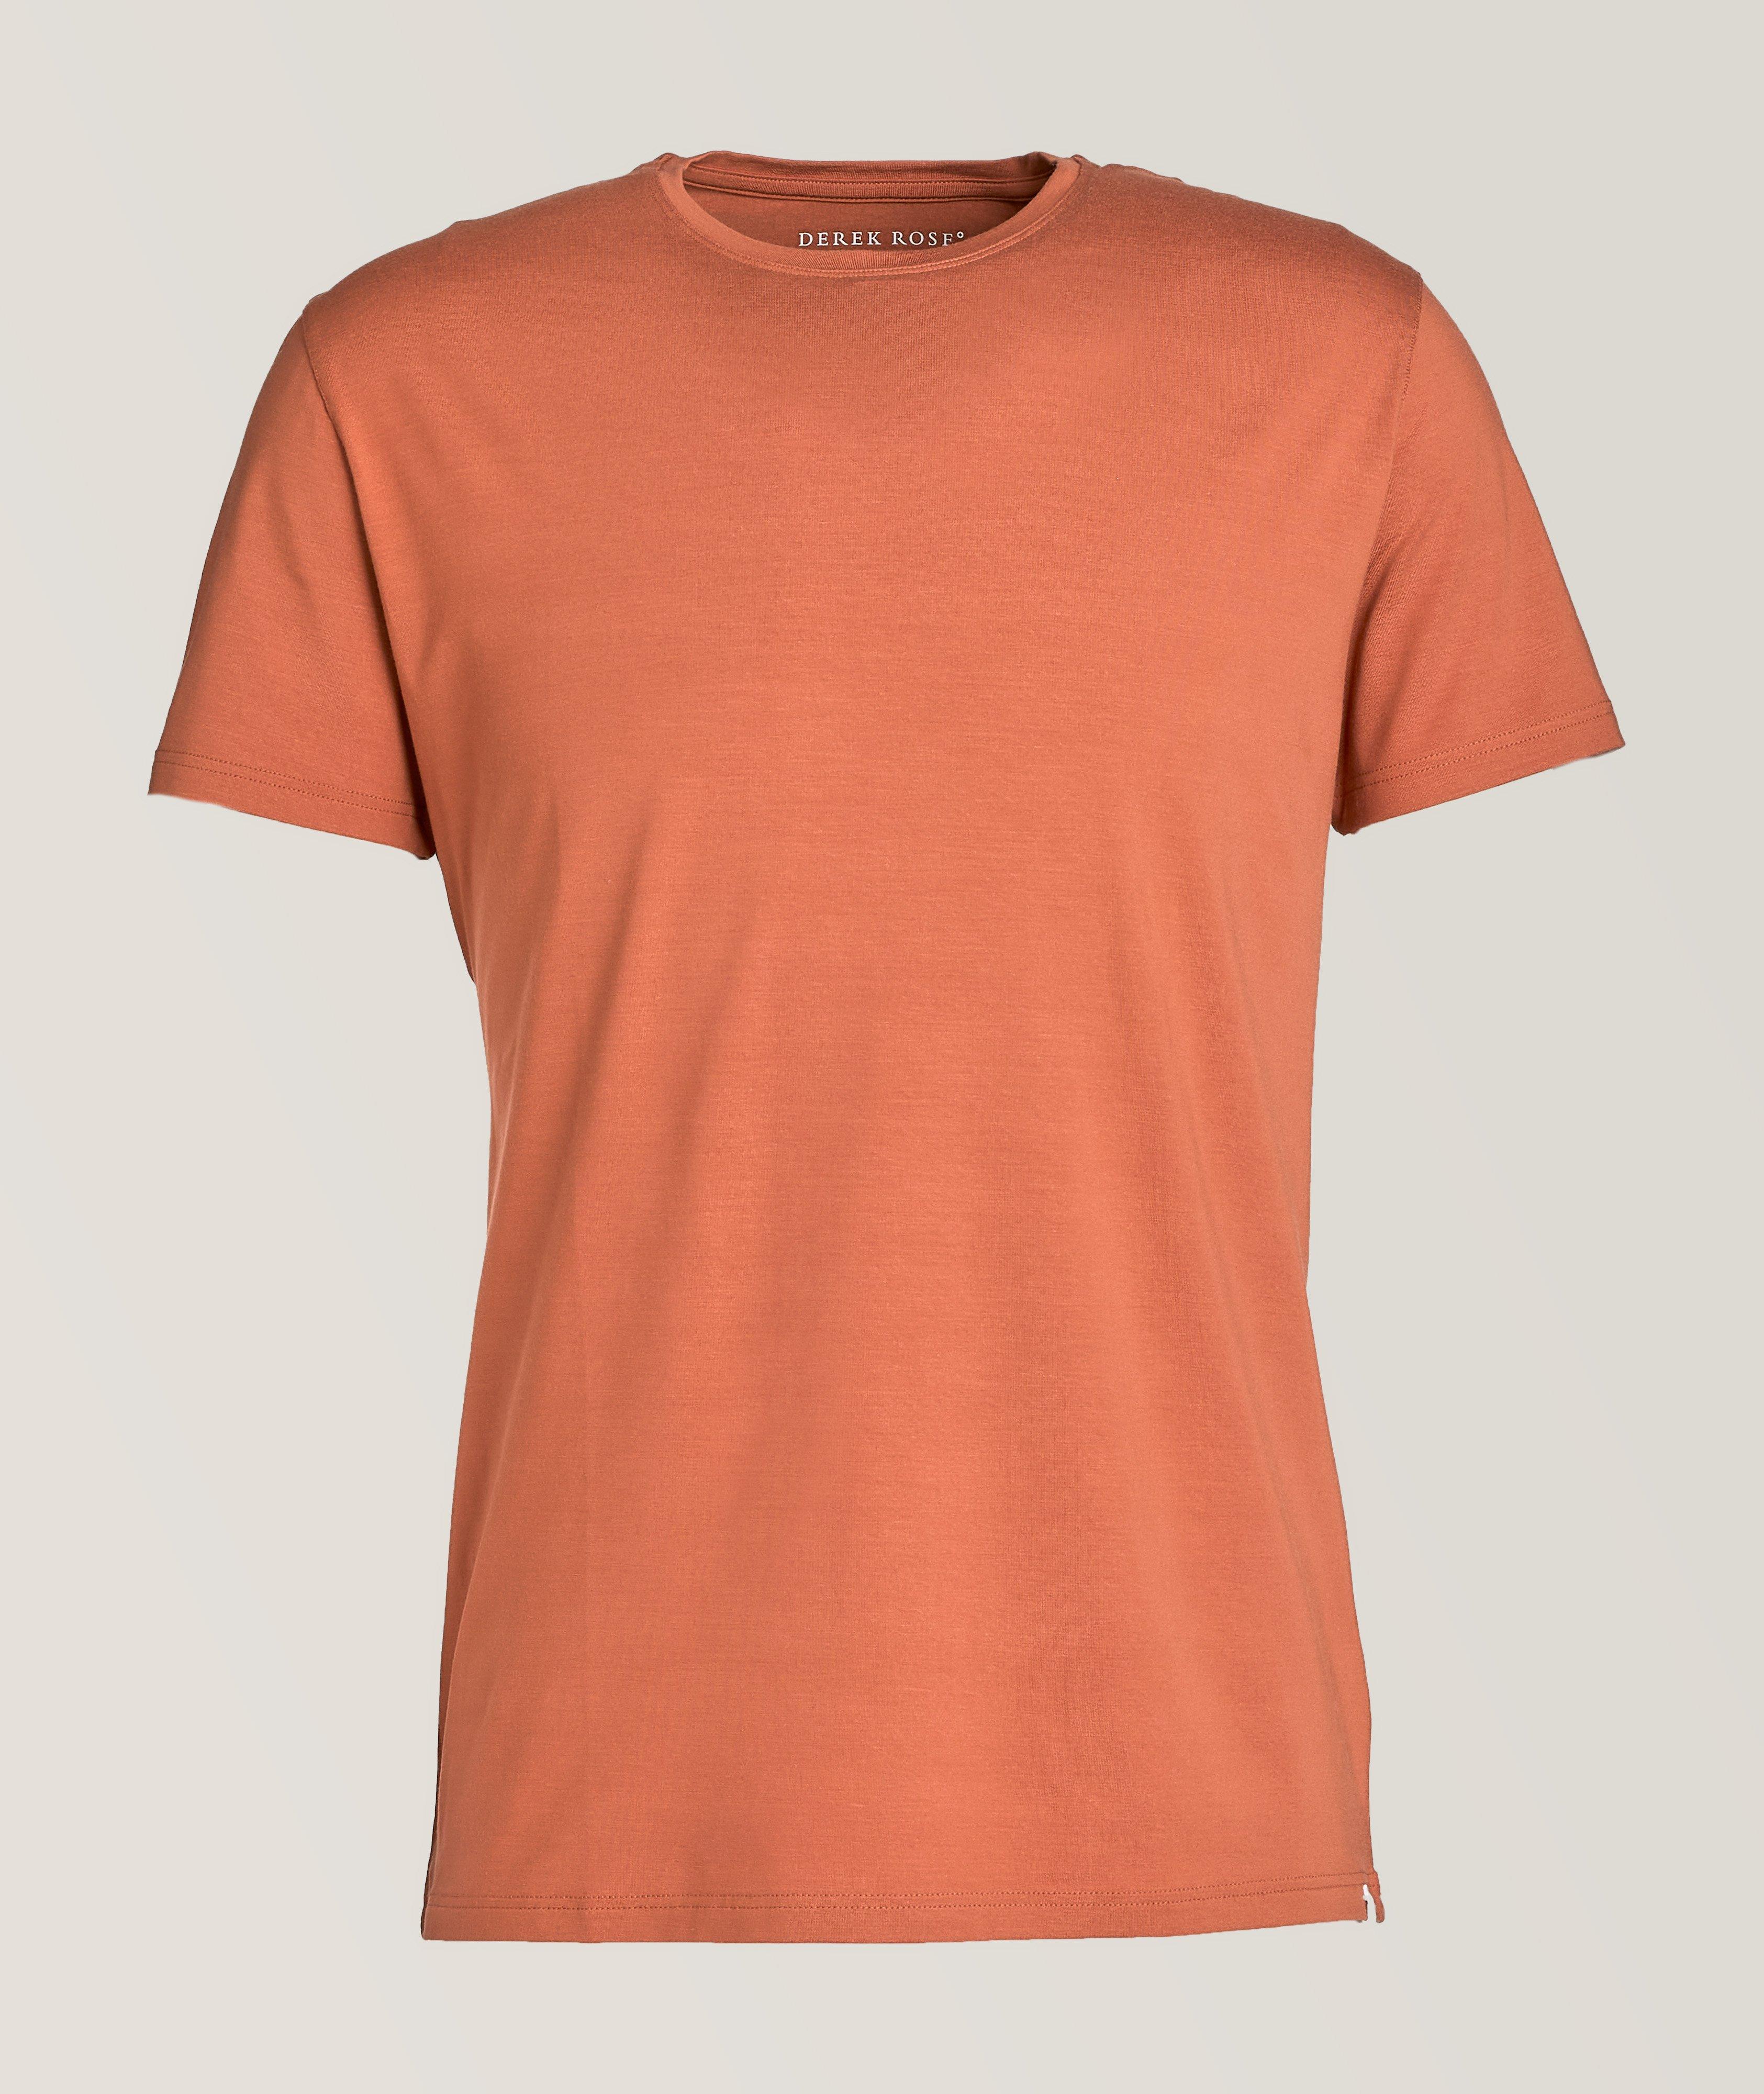 T-shirt Basel en micromodal image 0